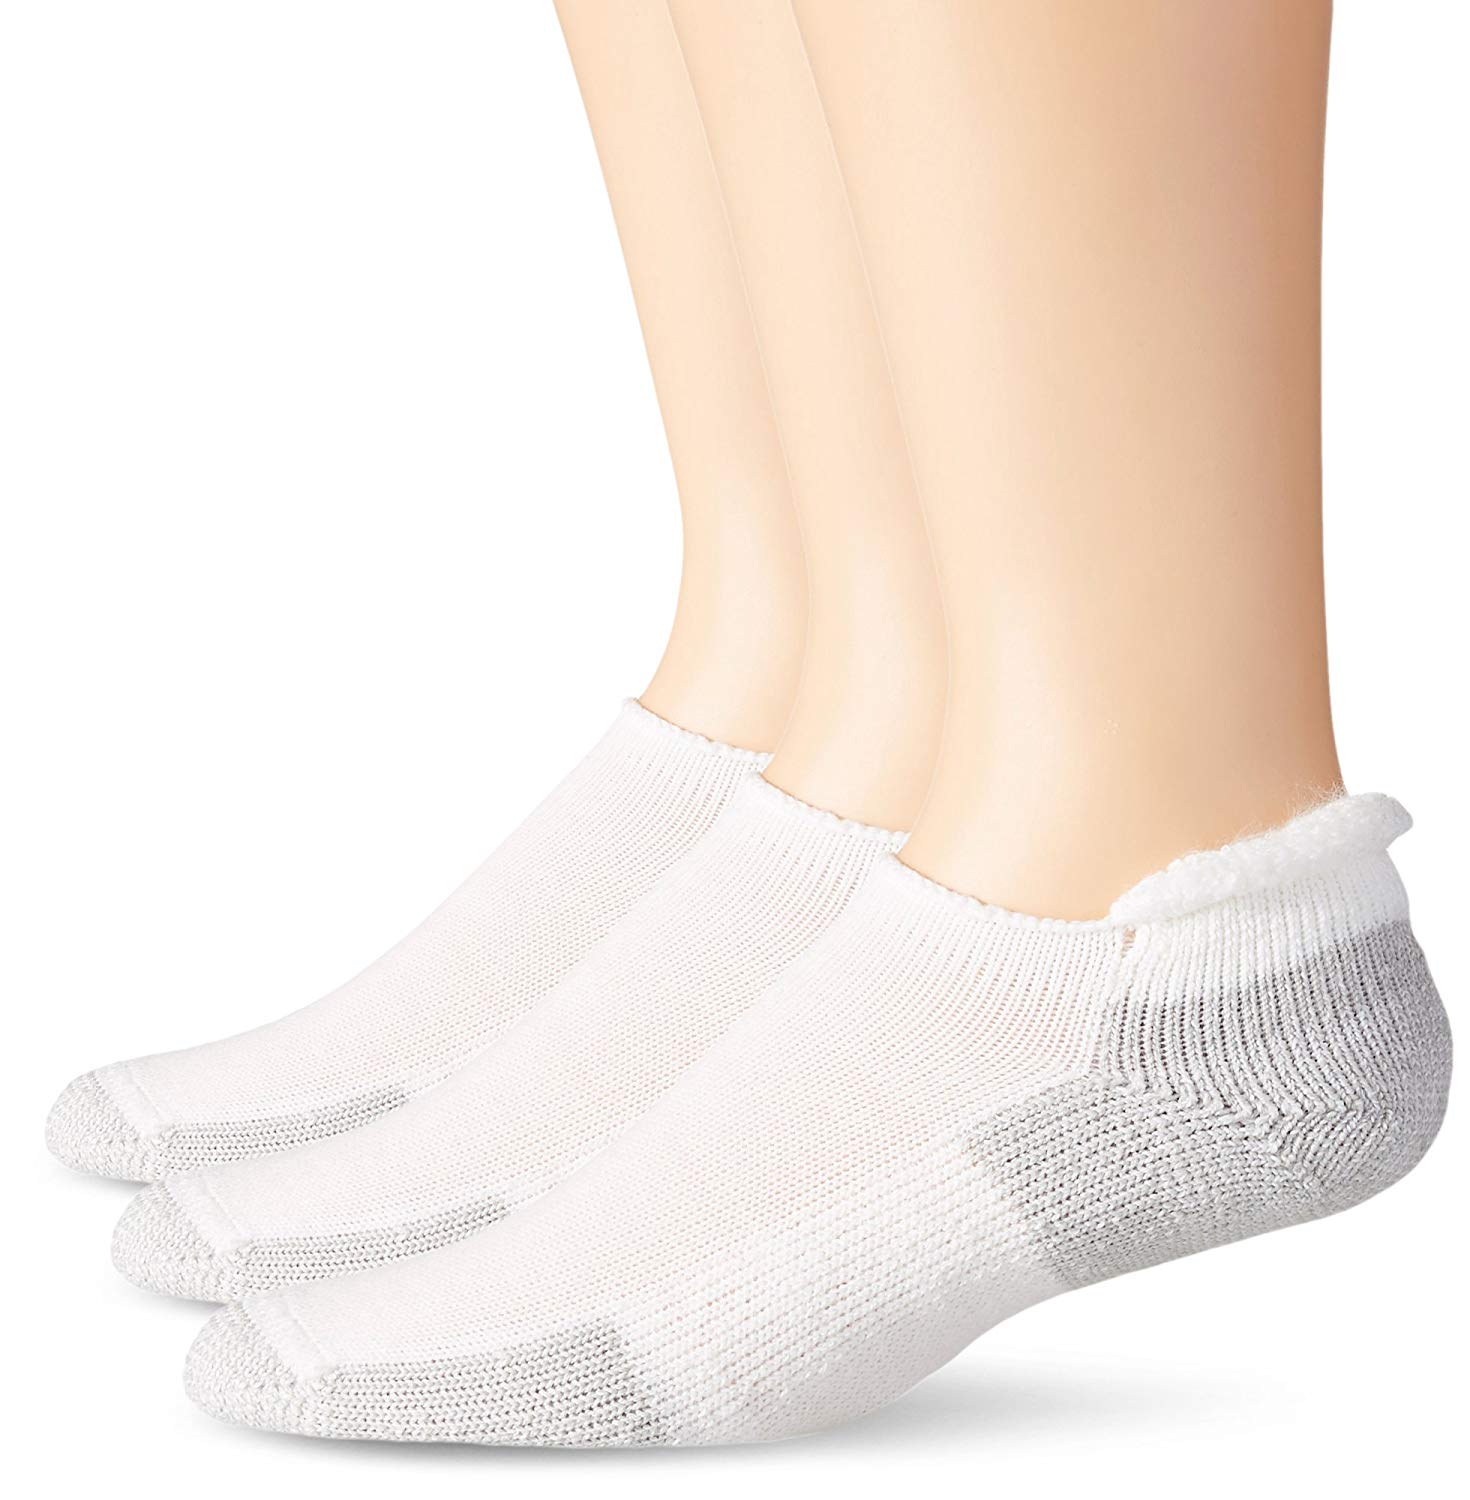 Thorlos Unisex J Running Thick Padded Rolltop Sock, White (3, White ...